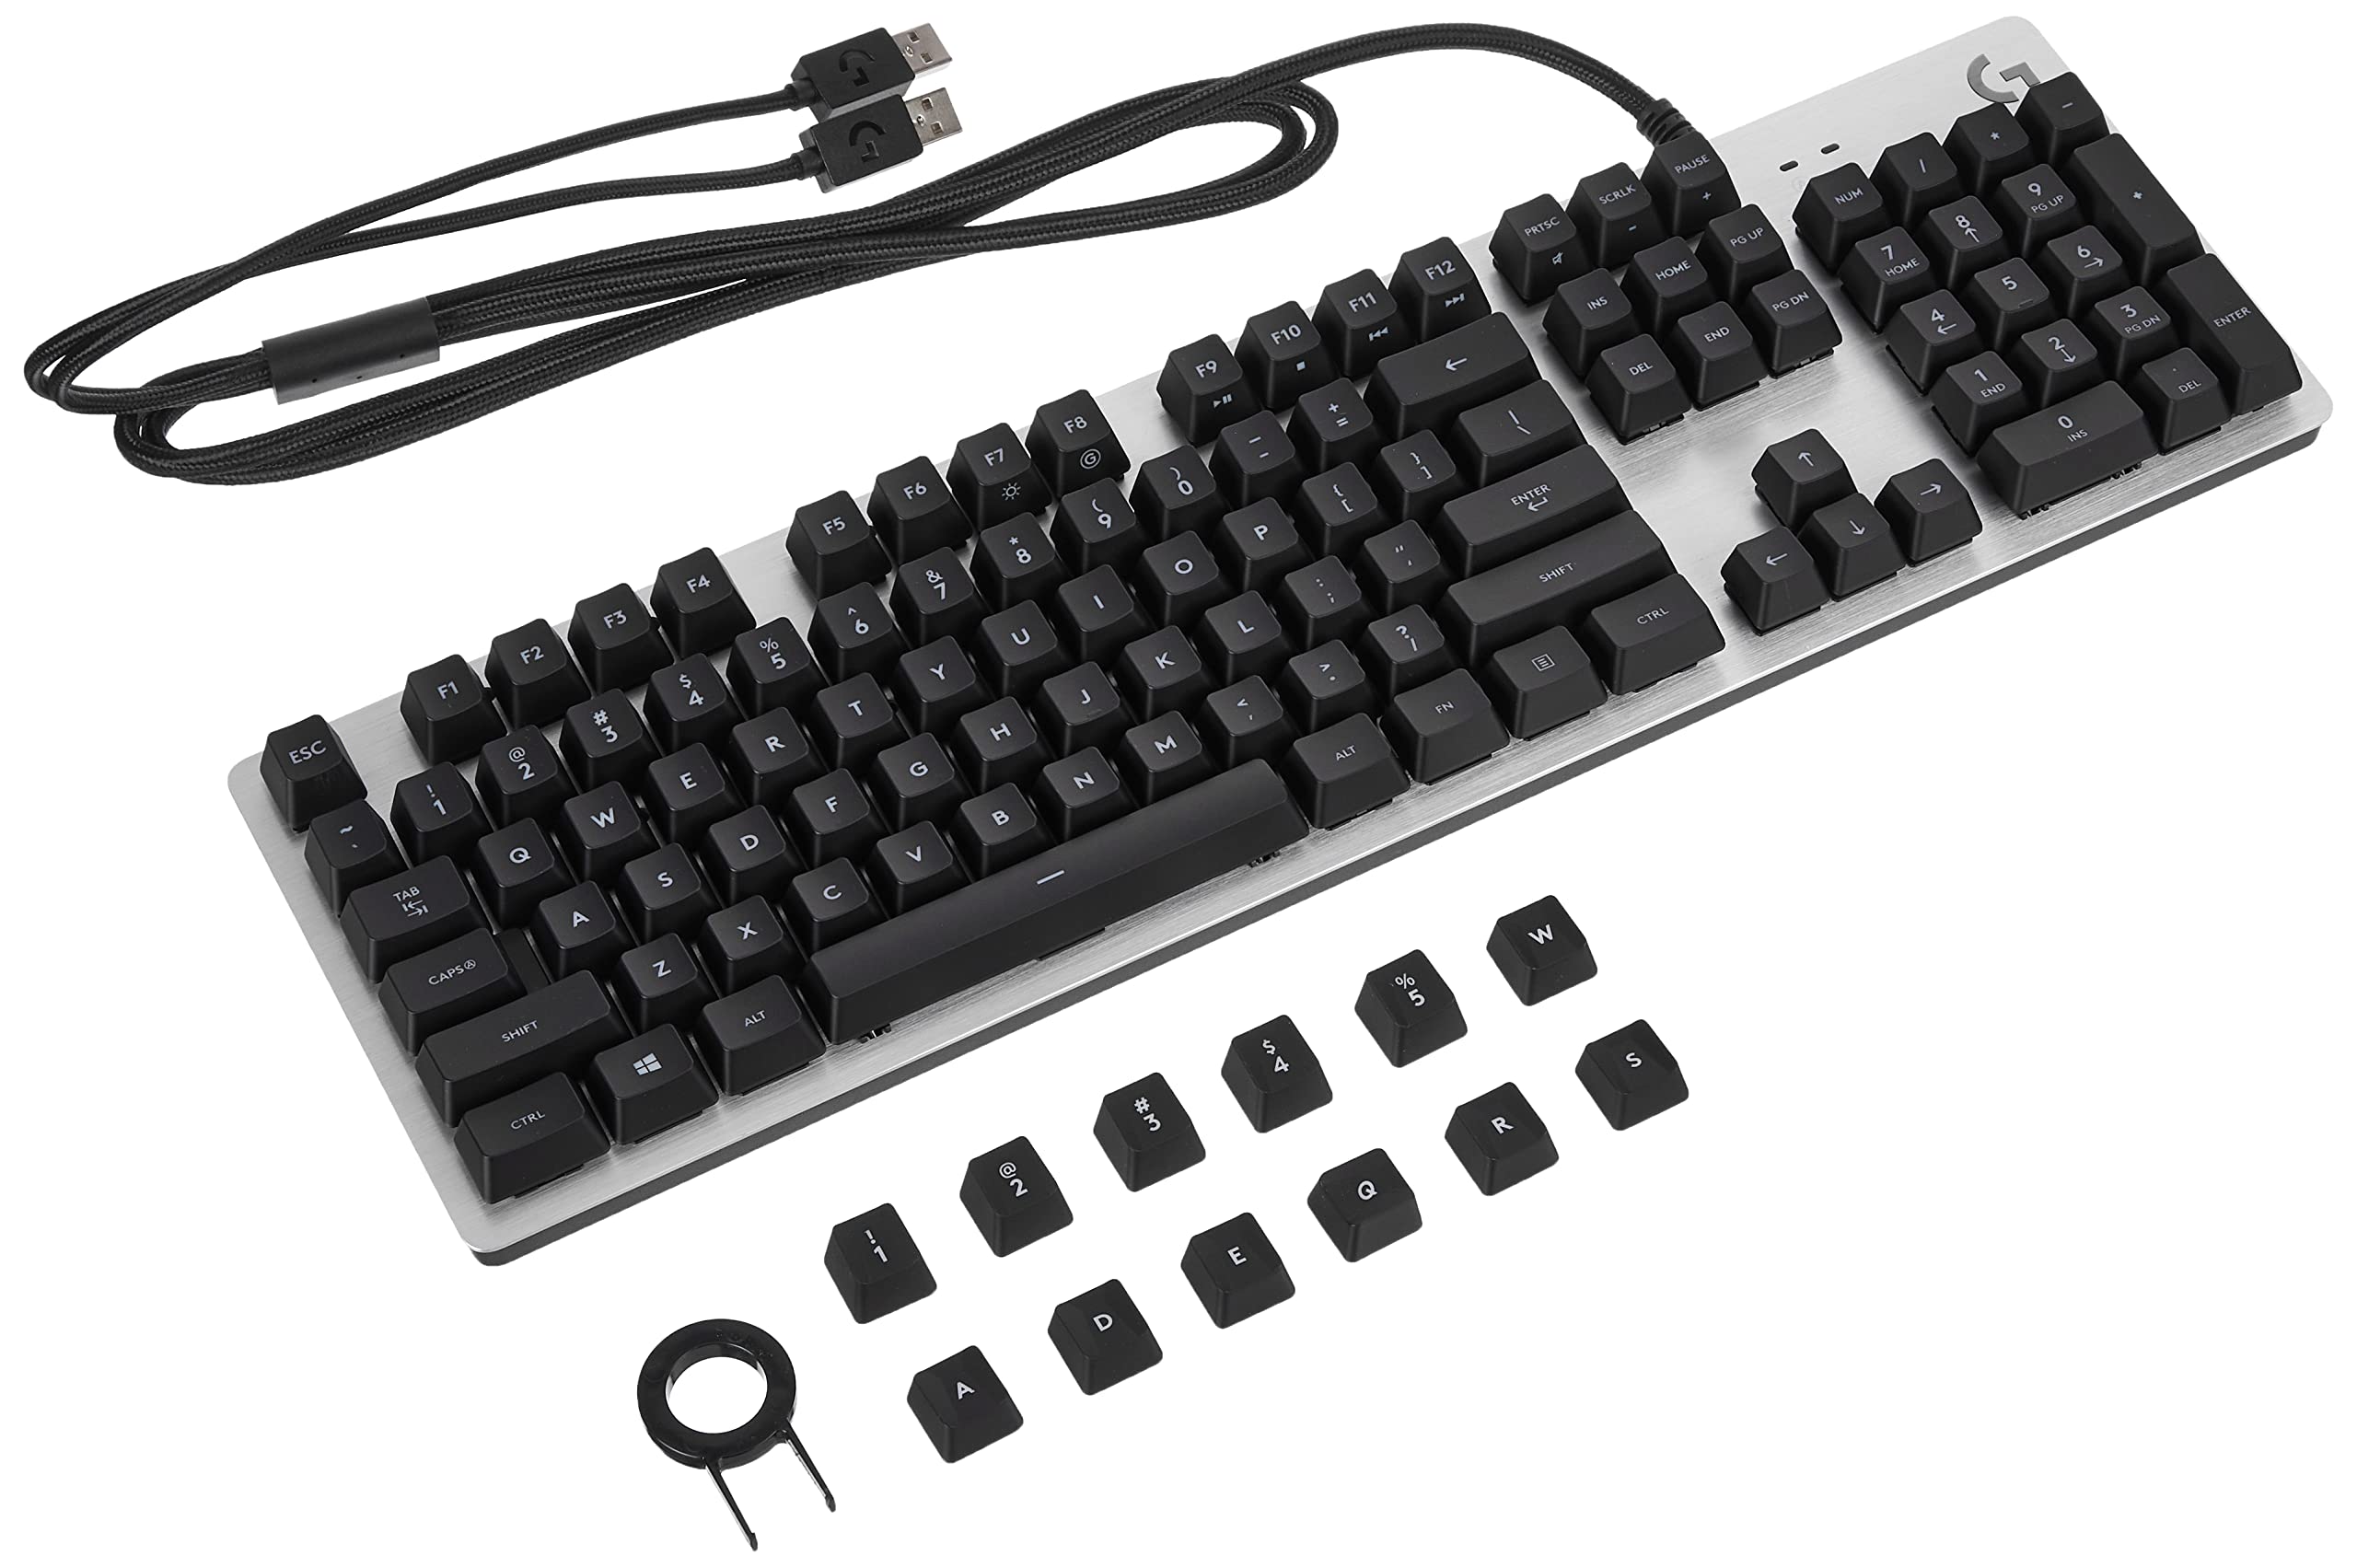 G413 Carbon / Silver Mechanical Gaming Keyboard